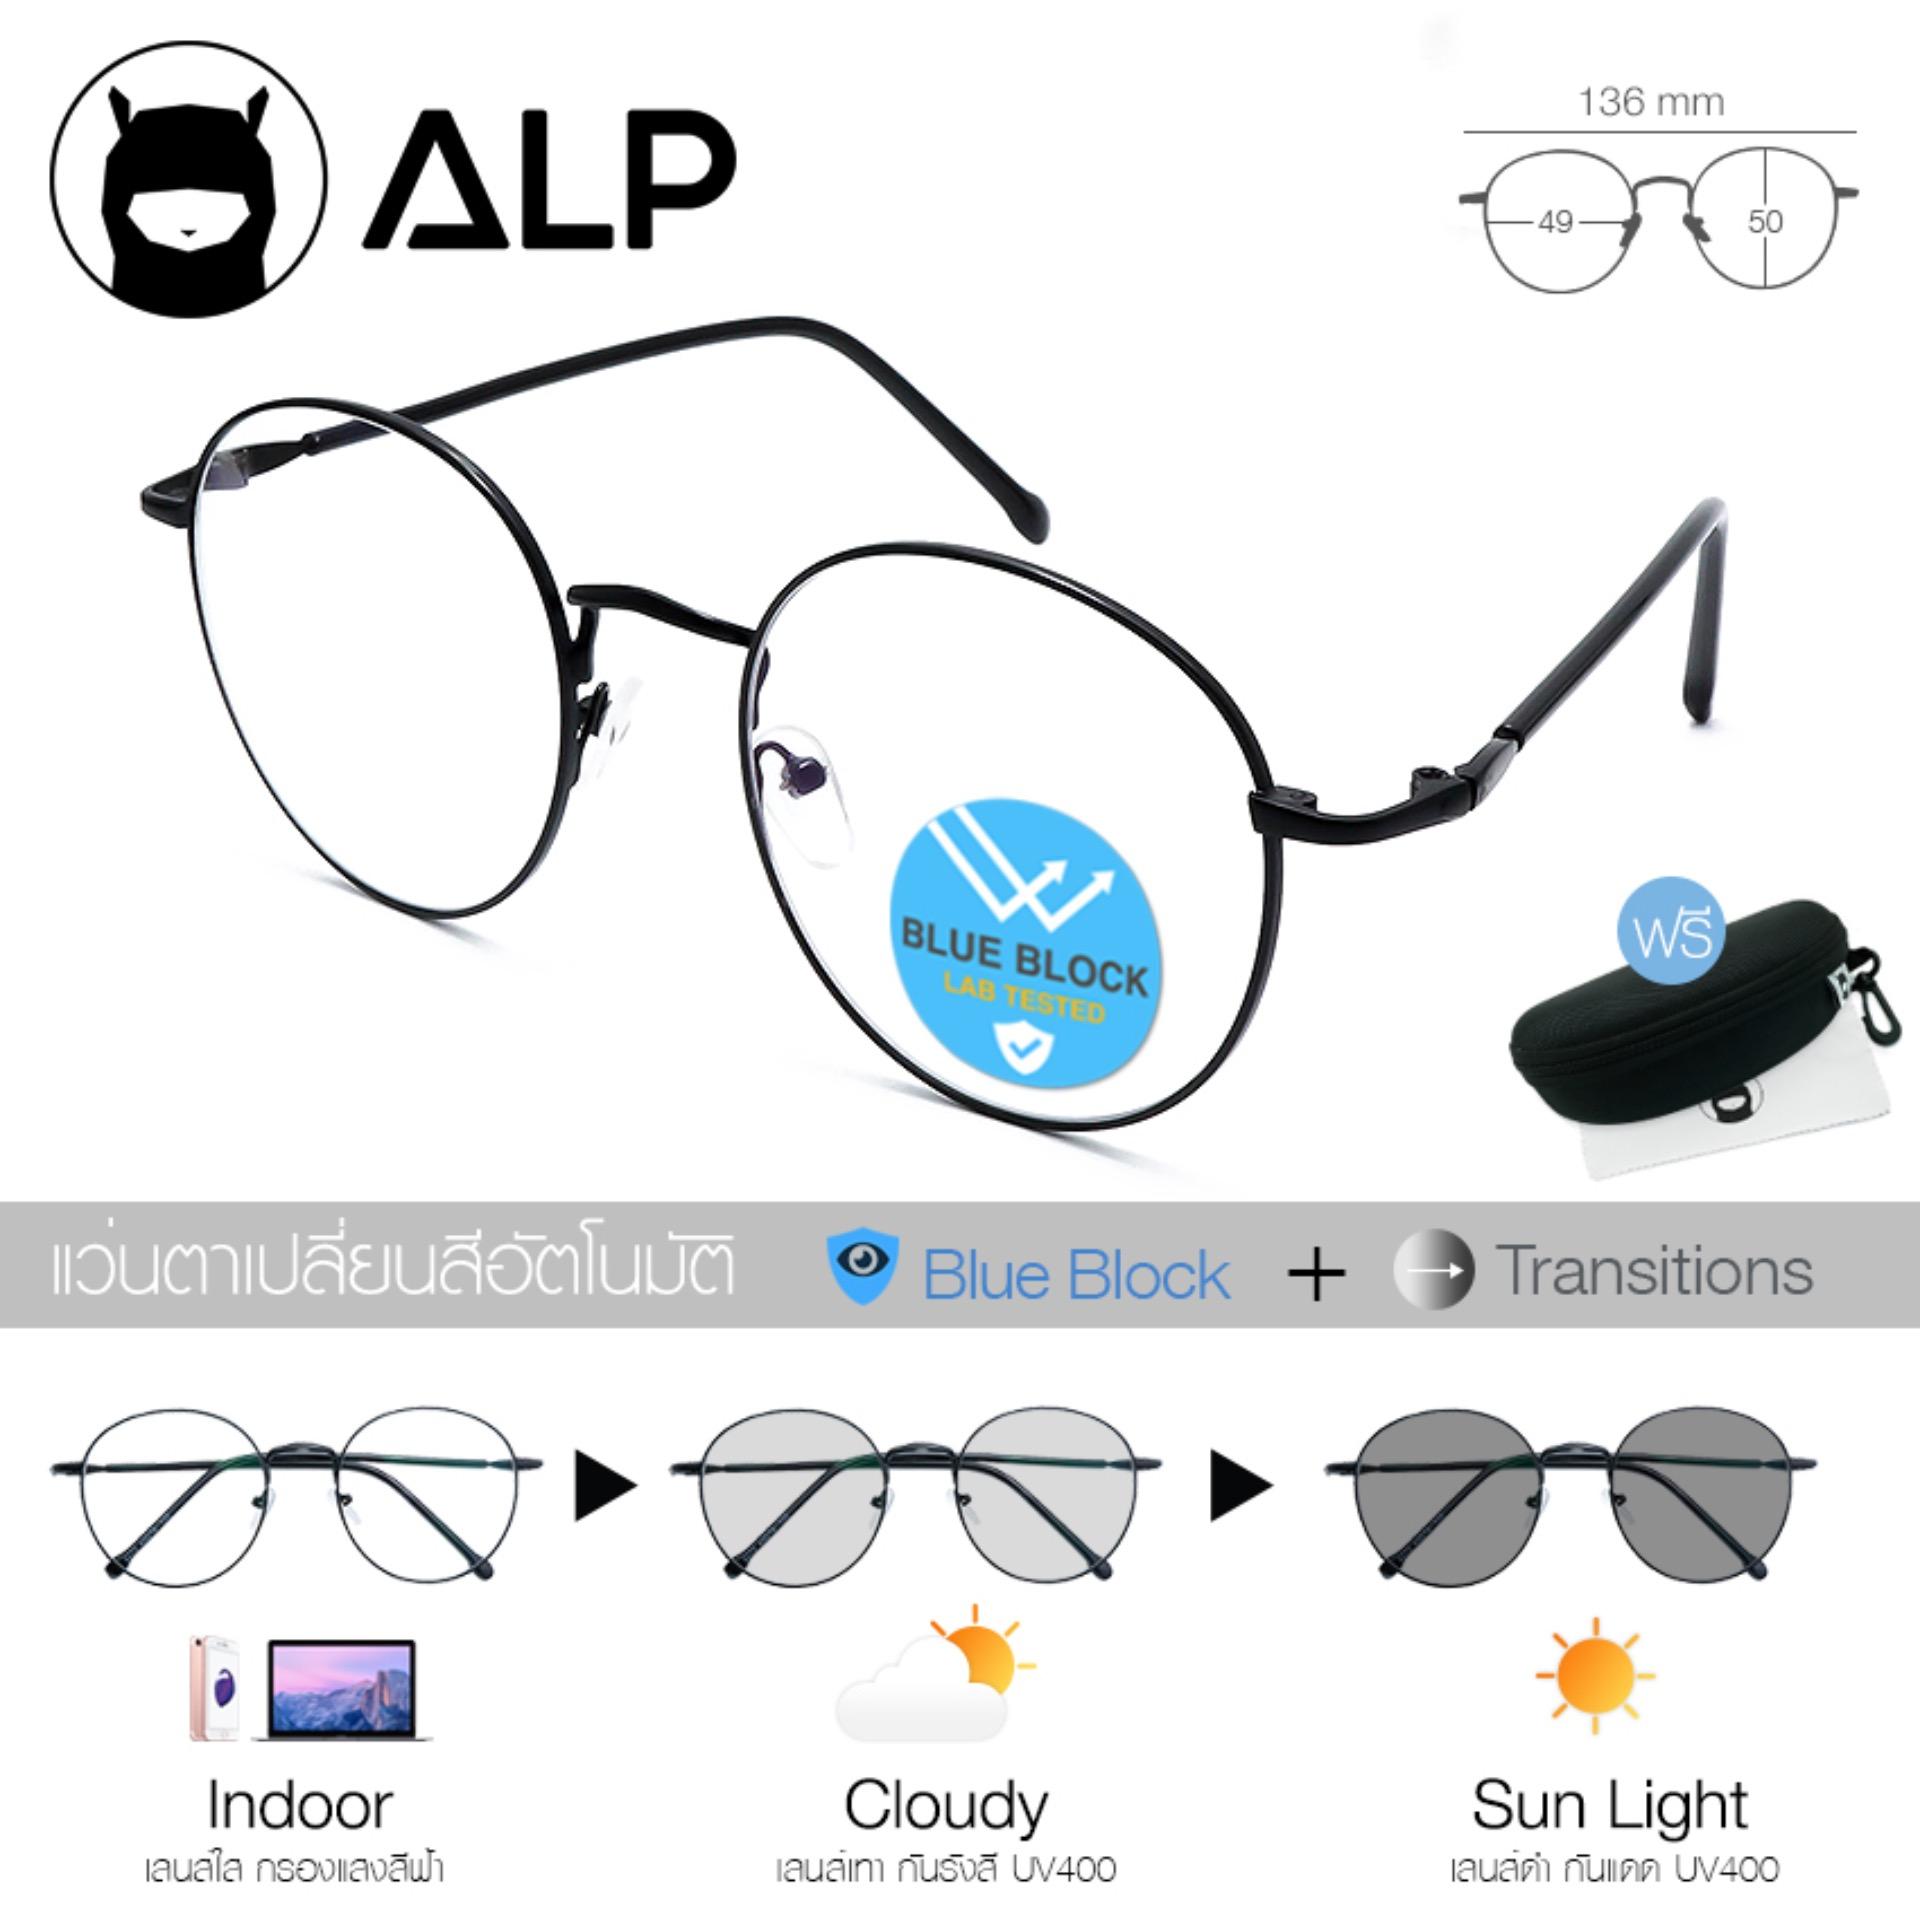 ALP Blue Block Transition Glasses แว่นกรองแสง เลนส์ออโต้ Auto Light-adjusting Lens  กันรังสี UV, UVA, UVB กรอบแว่นตา Vintage Style รุ่น ALP-E041